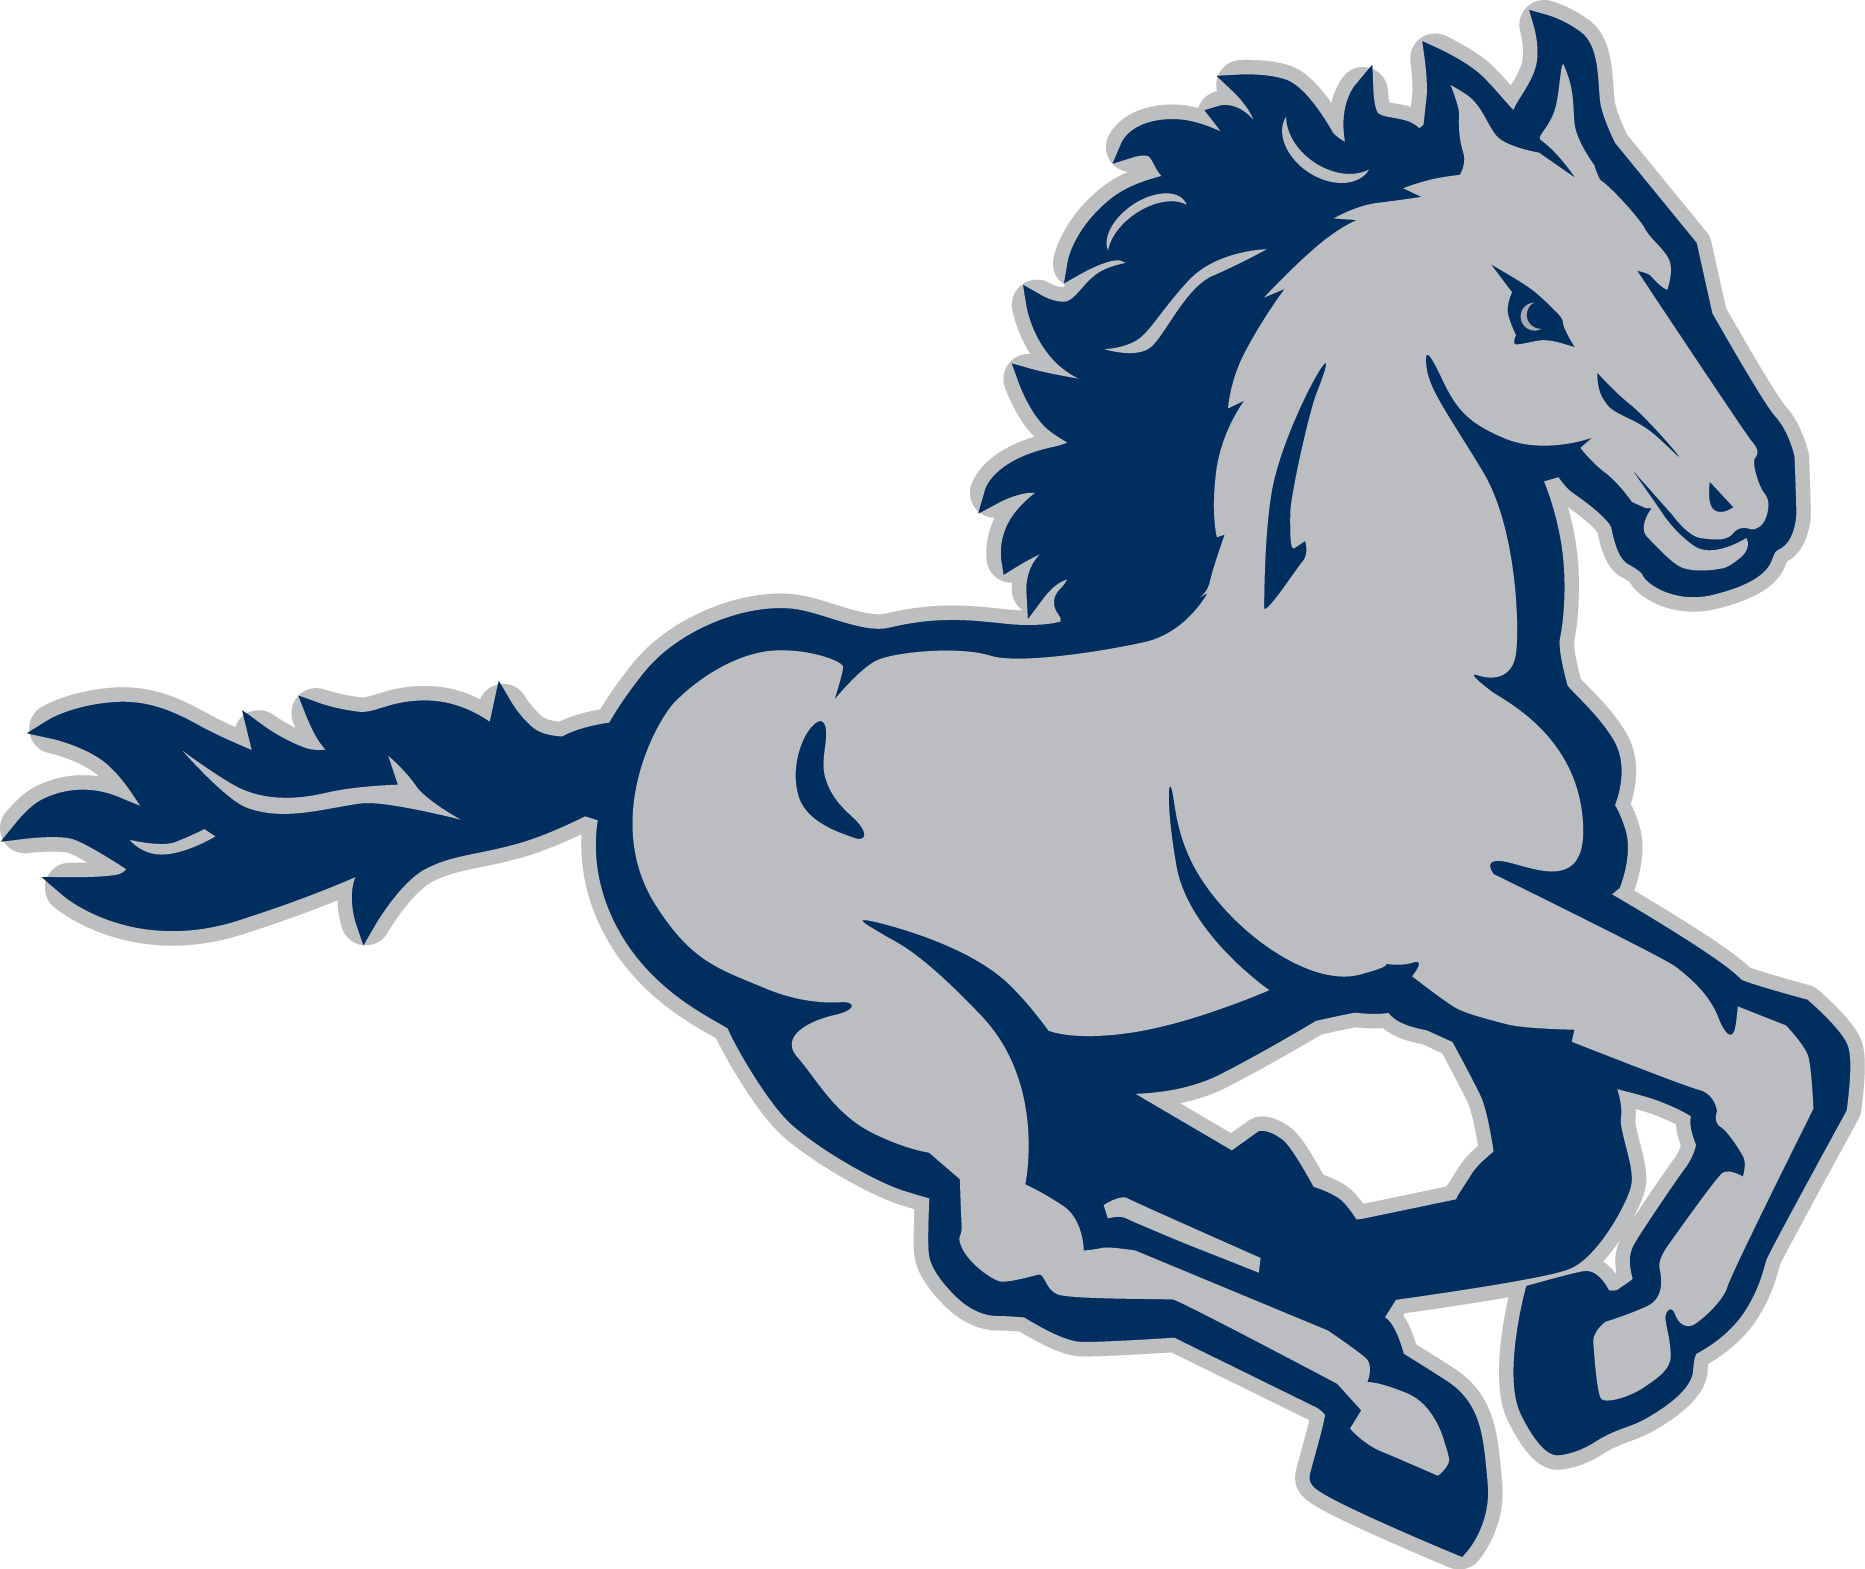 Mustang School Logo - Murchison Elementary School / Homepage